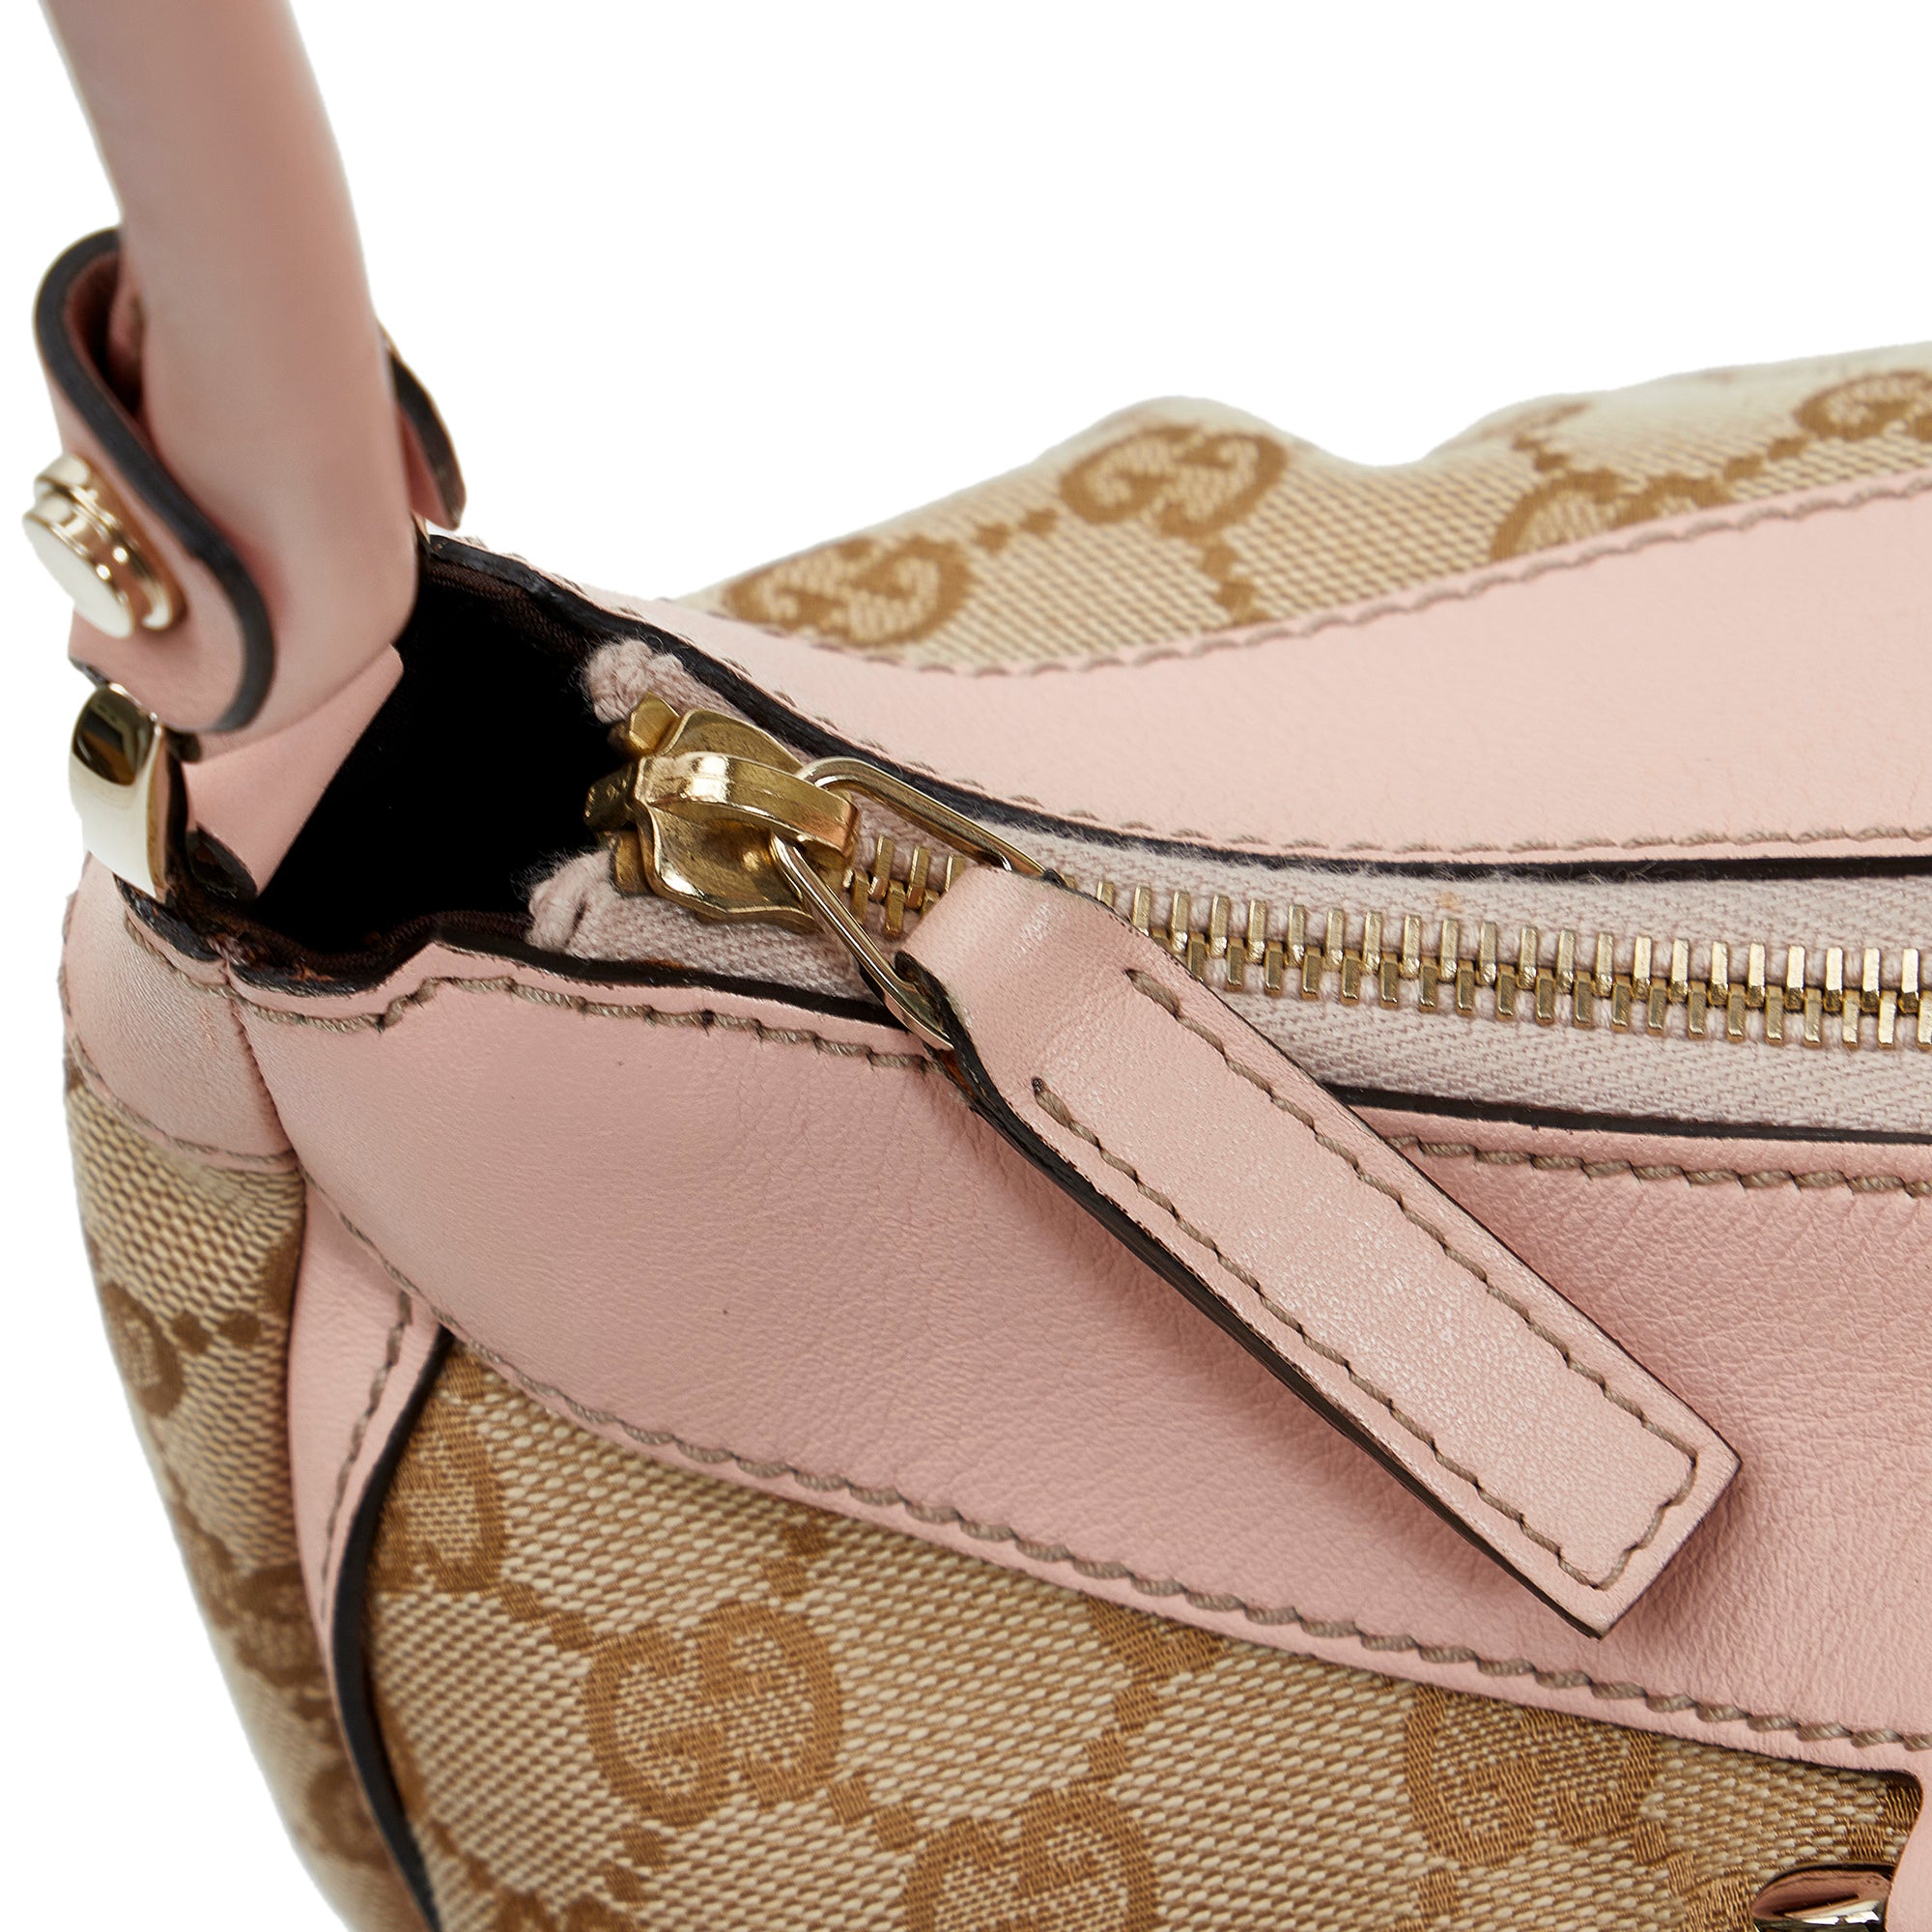 GUCCI GG Canvas Beige/Pink Accessories Pochette Bag-US